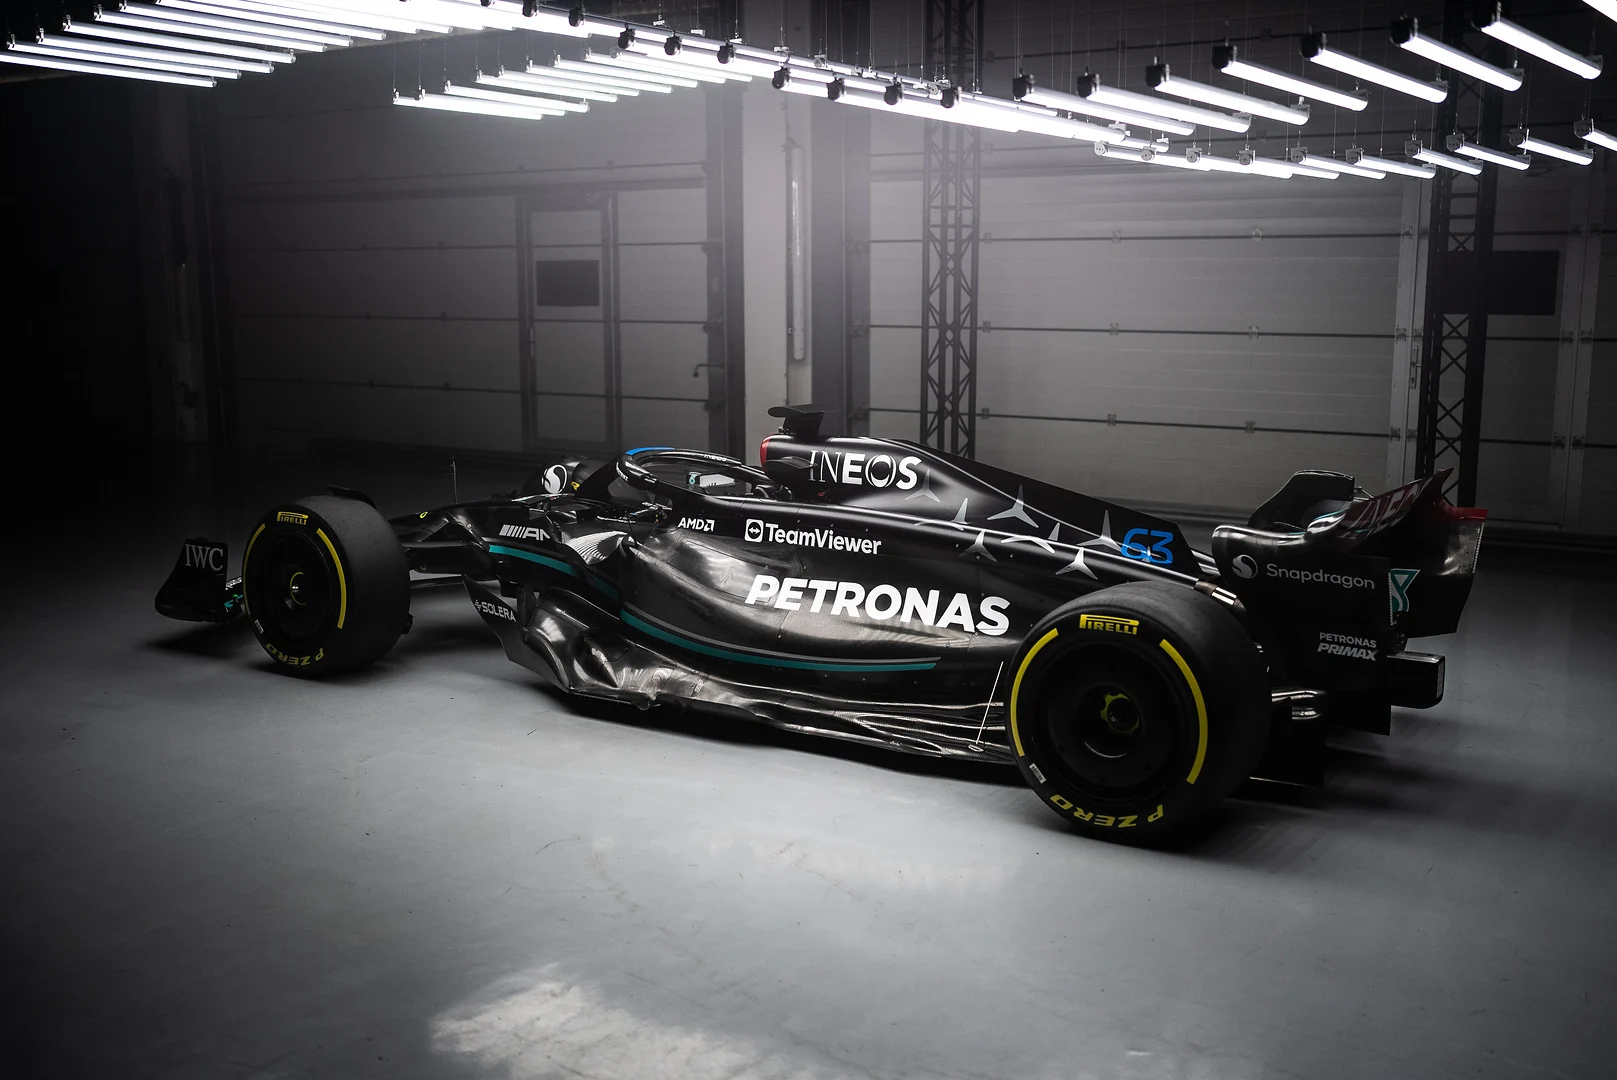 AMD supplies Epyc processors for Mercedes-AMG Petronas F1 racing